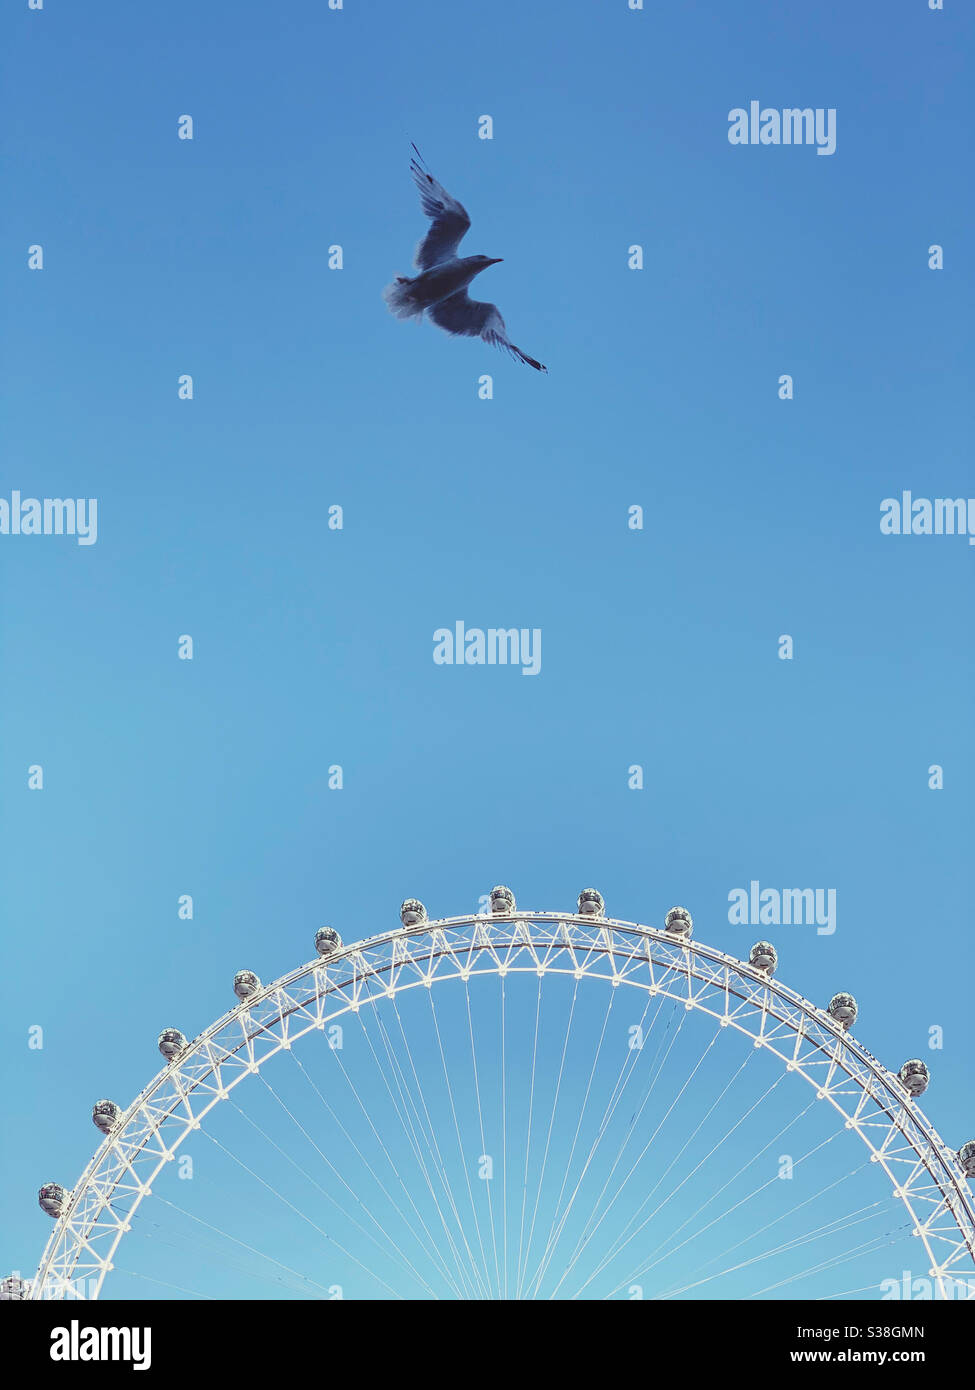 Bird flying over London eye Ferris wheel Stock Photo